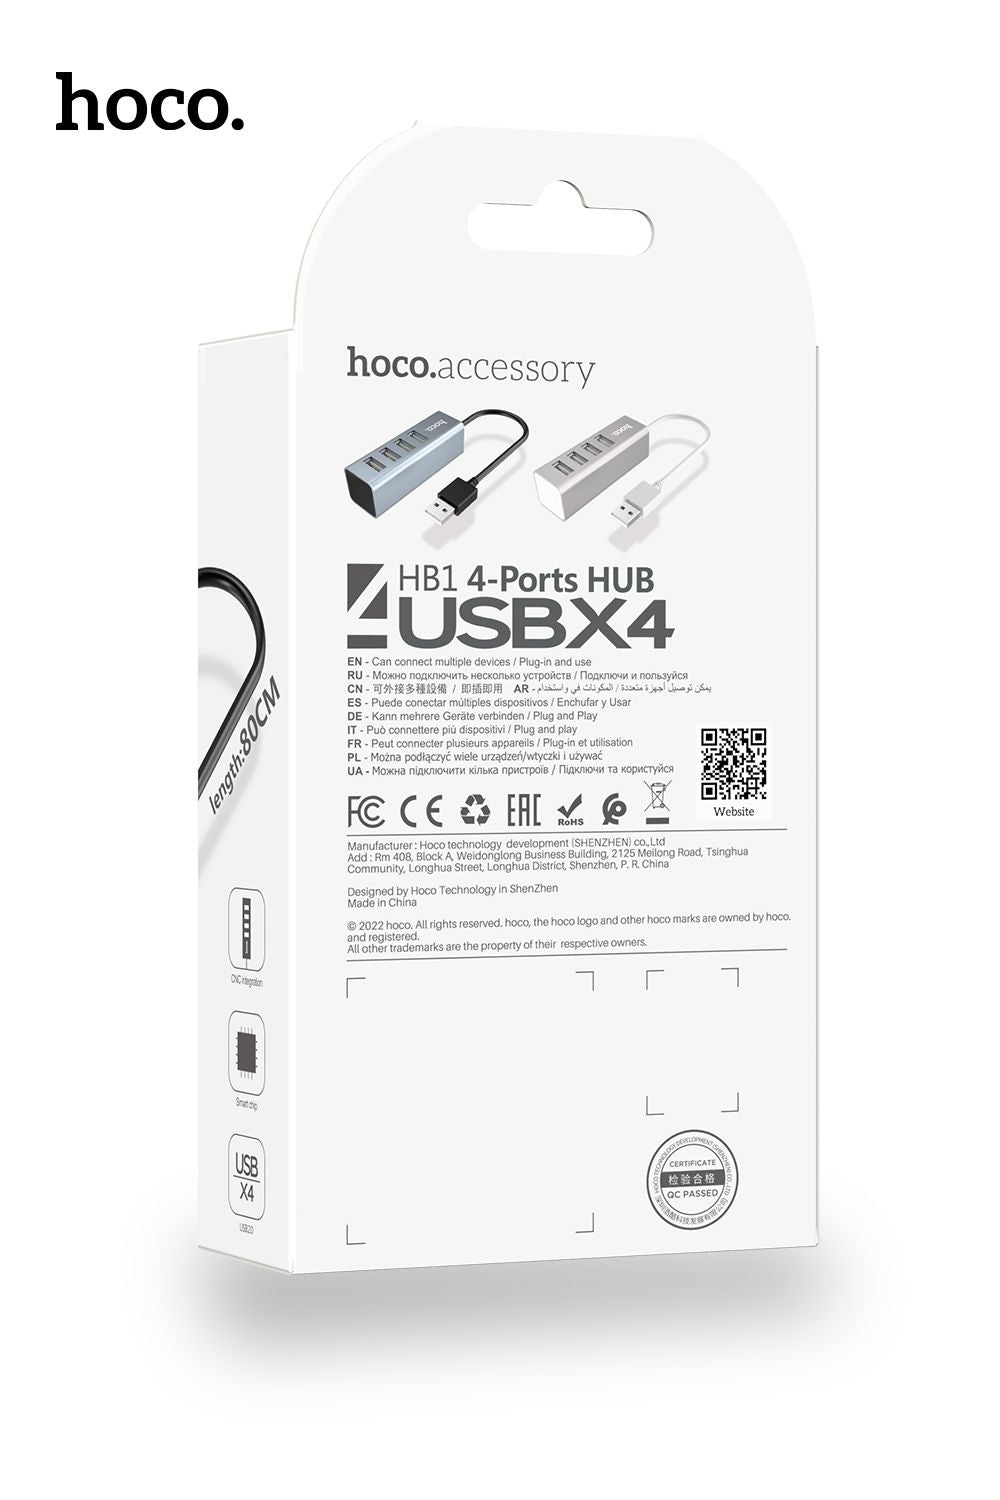 Hoco 4 USB Hub Smart Splitter Compact Design Fast Charging Station Interface - Black